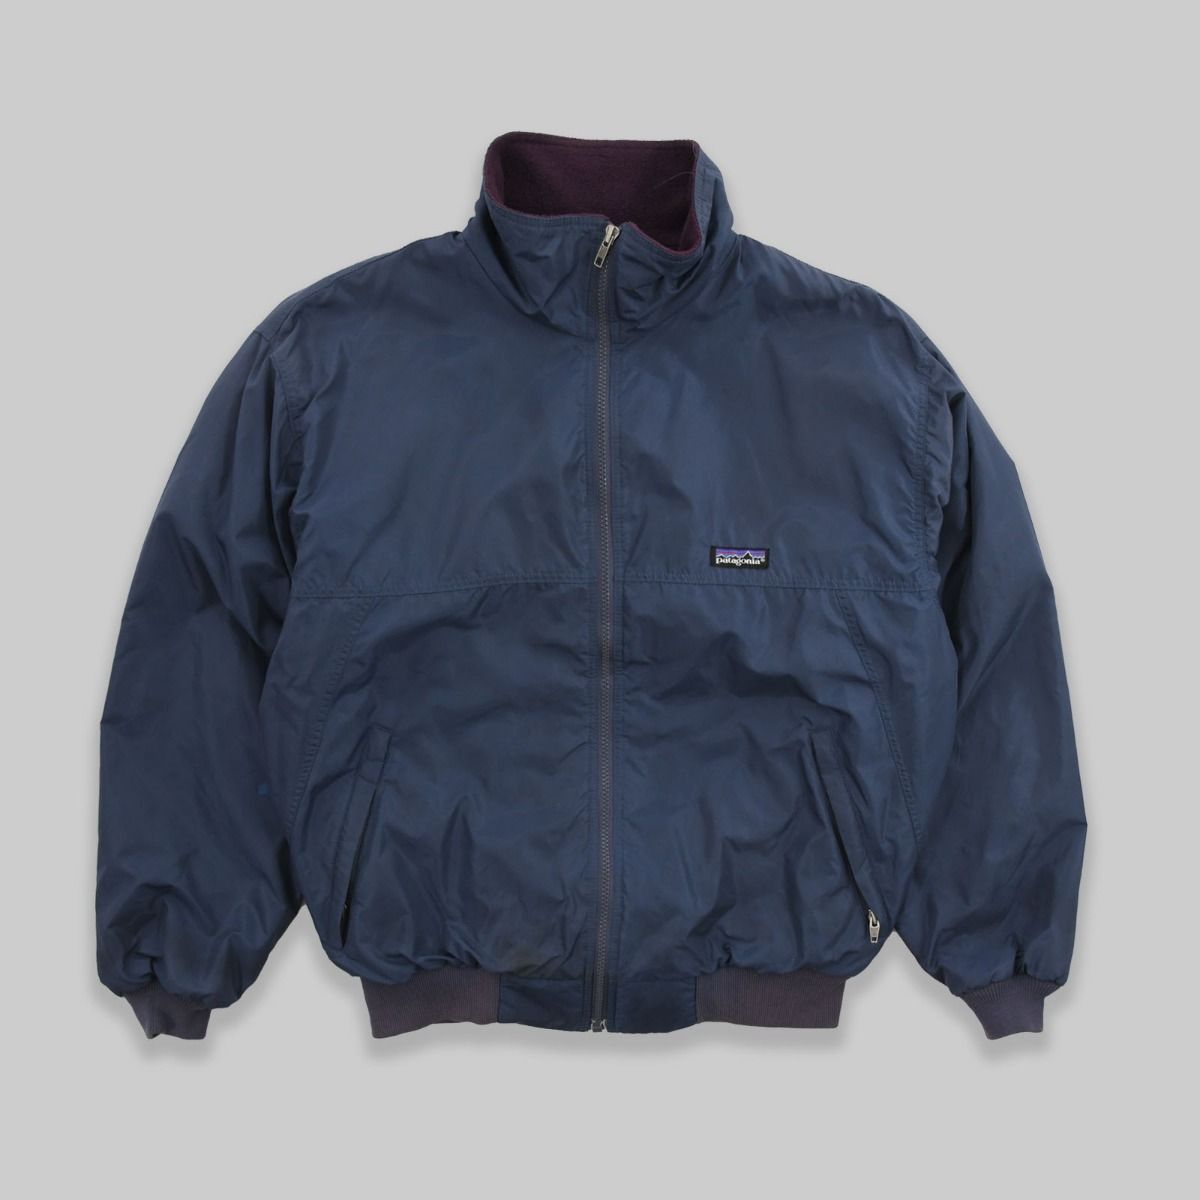 Patagonia 1990s Fleece Lined Jacket